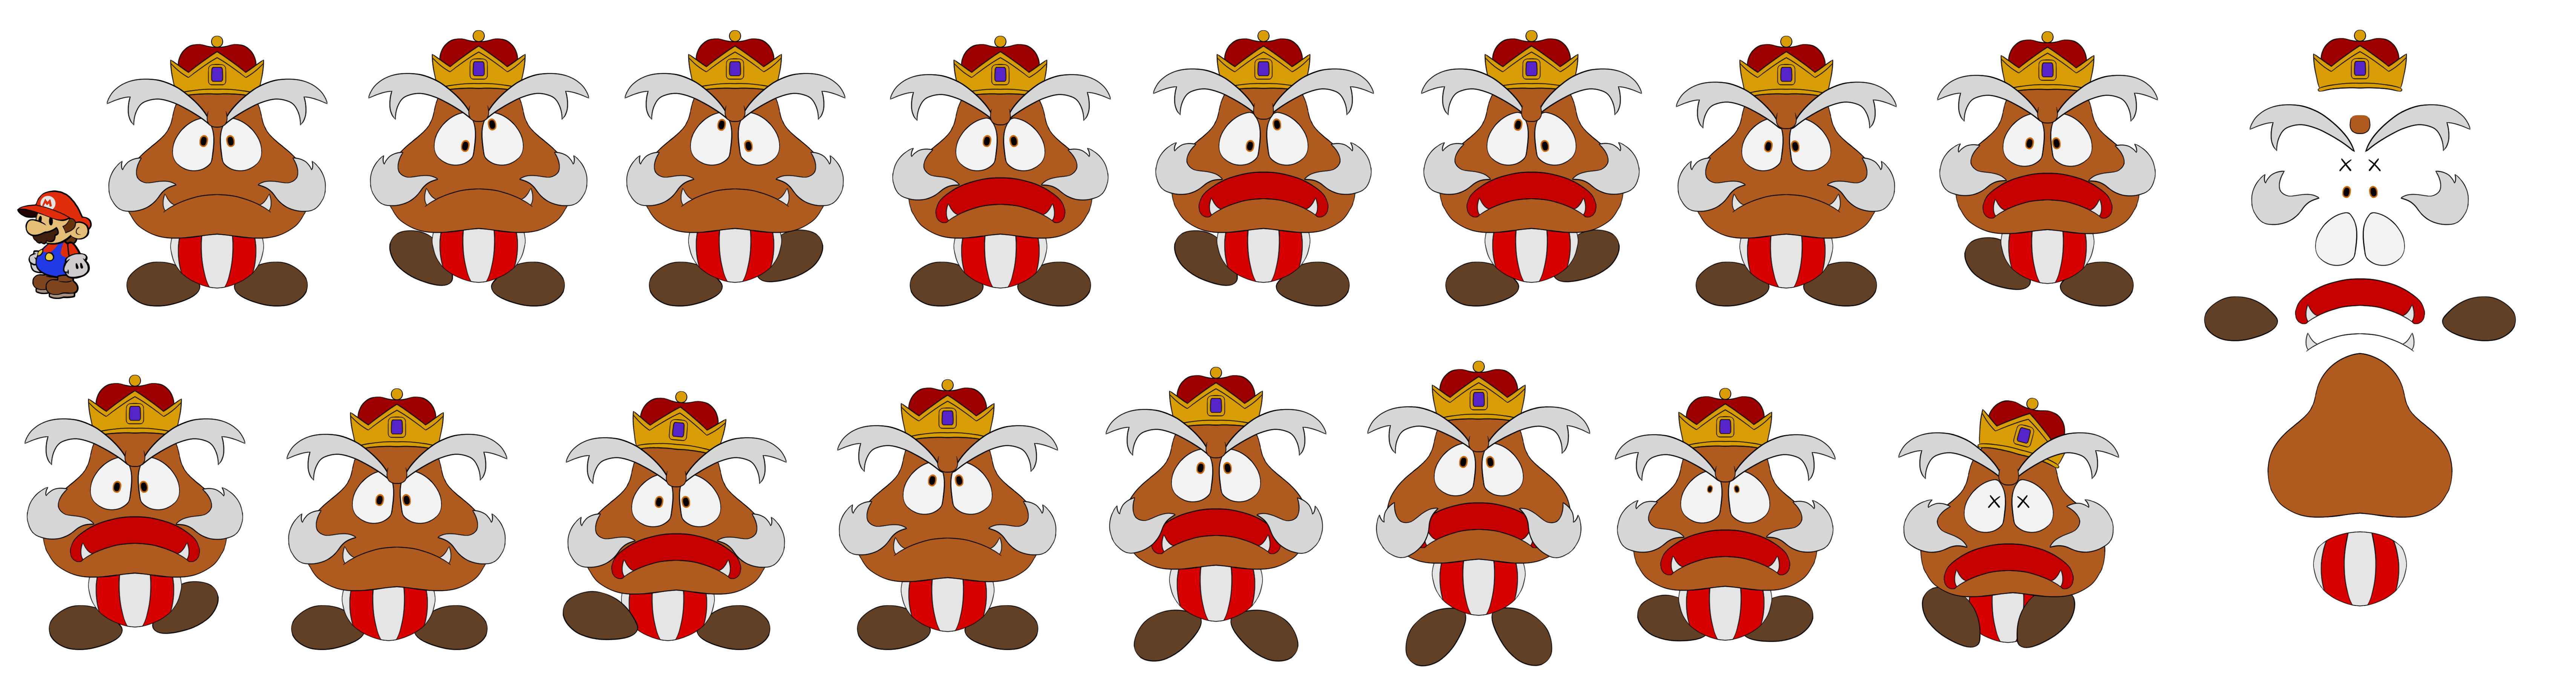 Paper Mario Customs - King Goomba / Goomboss (Paper Mario-Style)